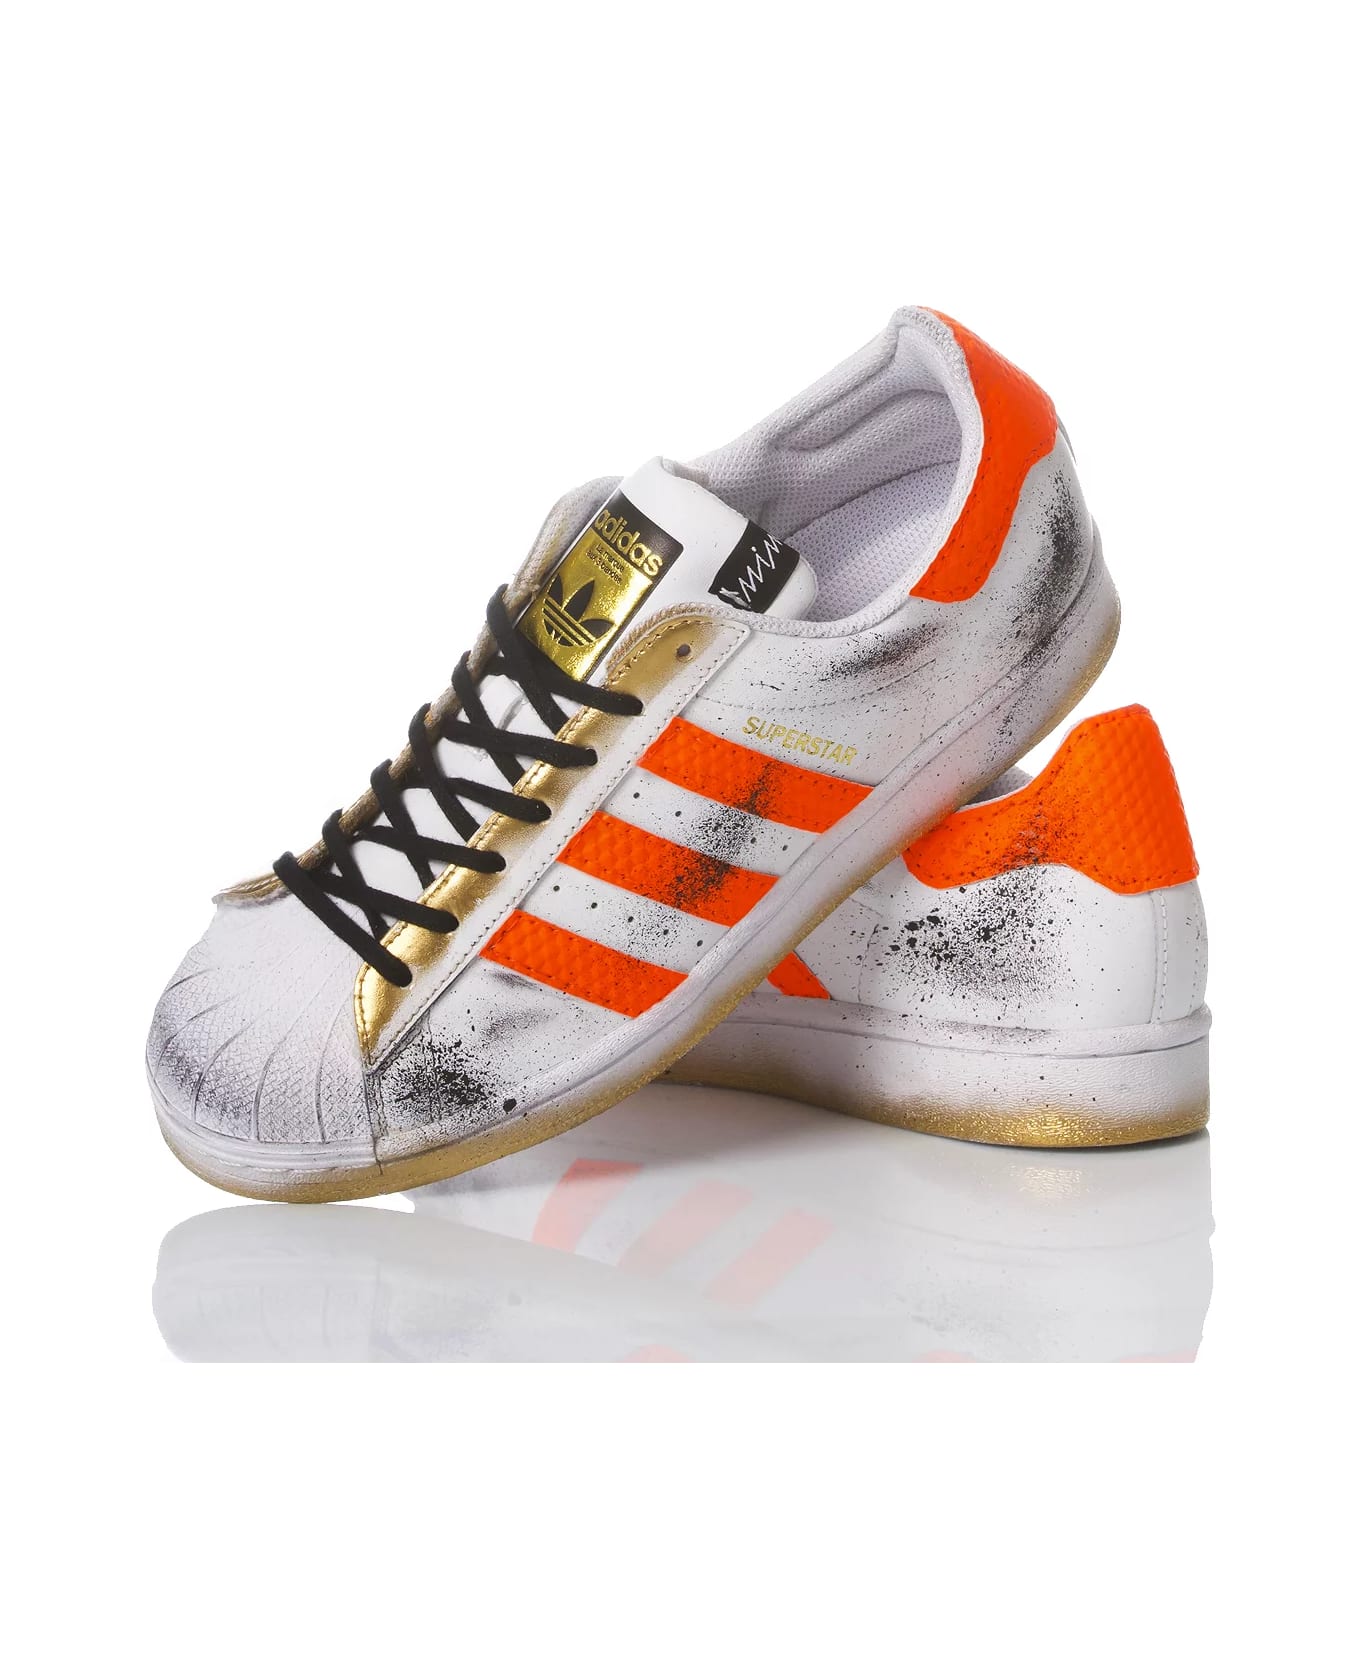 Mimanera Adidas Superstar Orange Boost Customized Mimanera